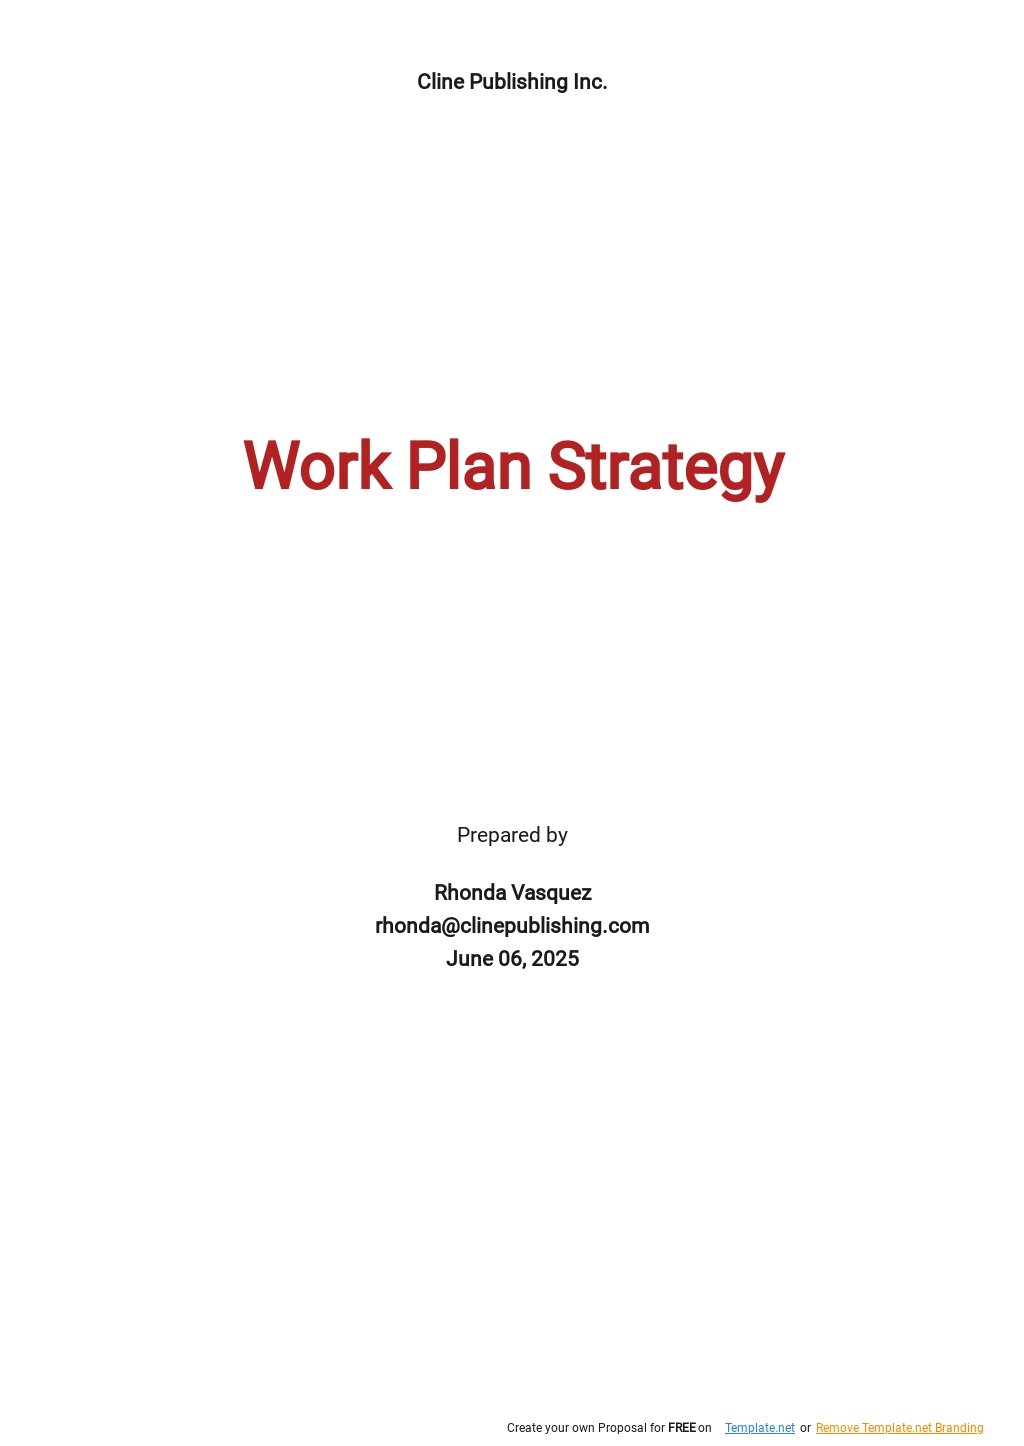 Work Plan Strategy Template.jpe